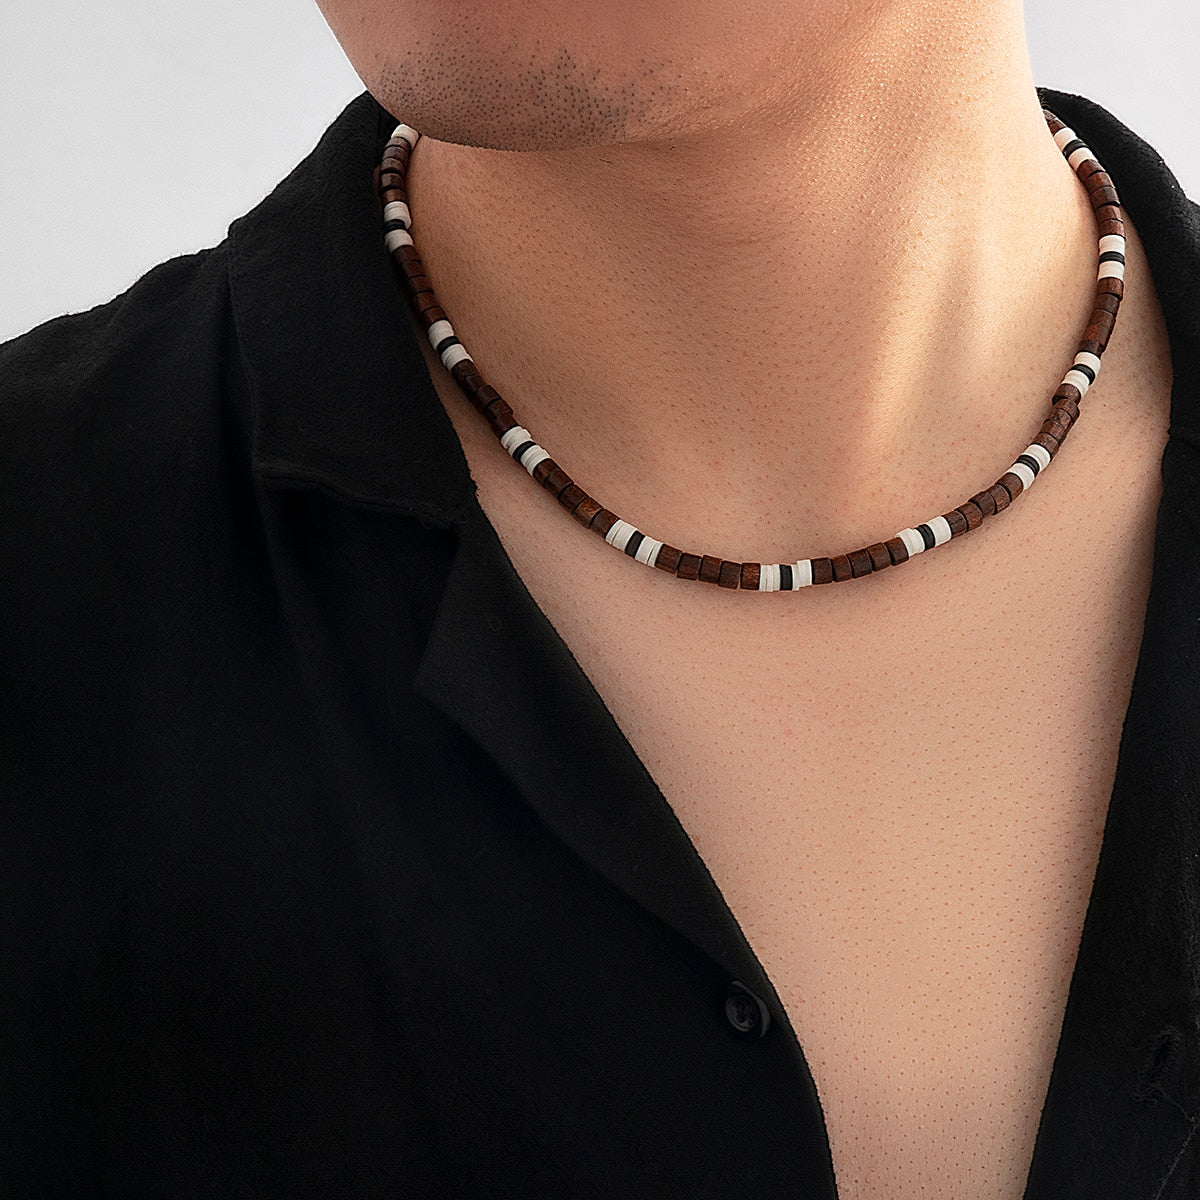 89 polymer necklace